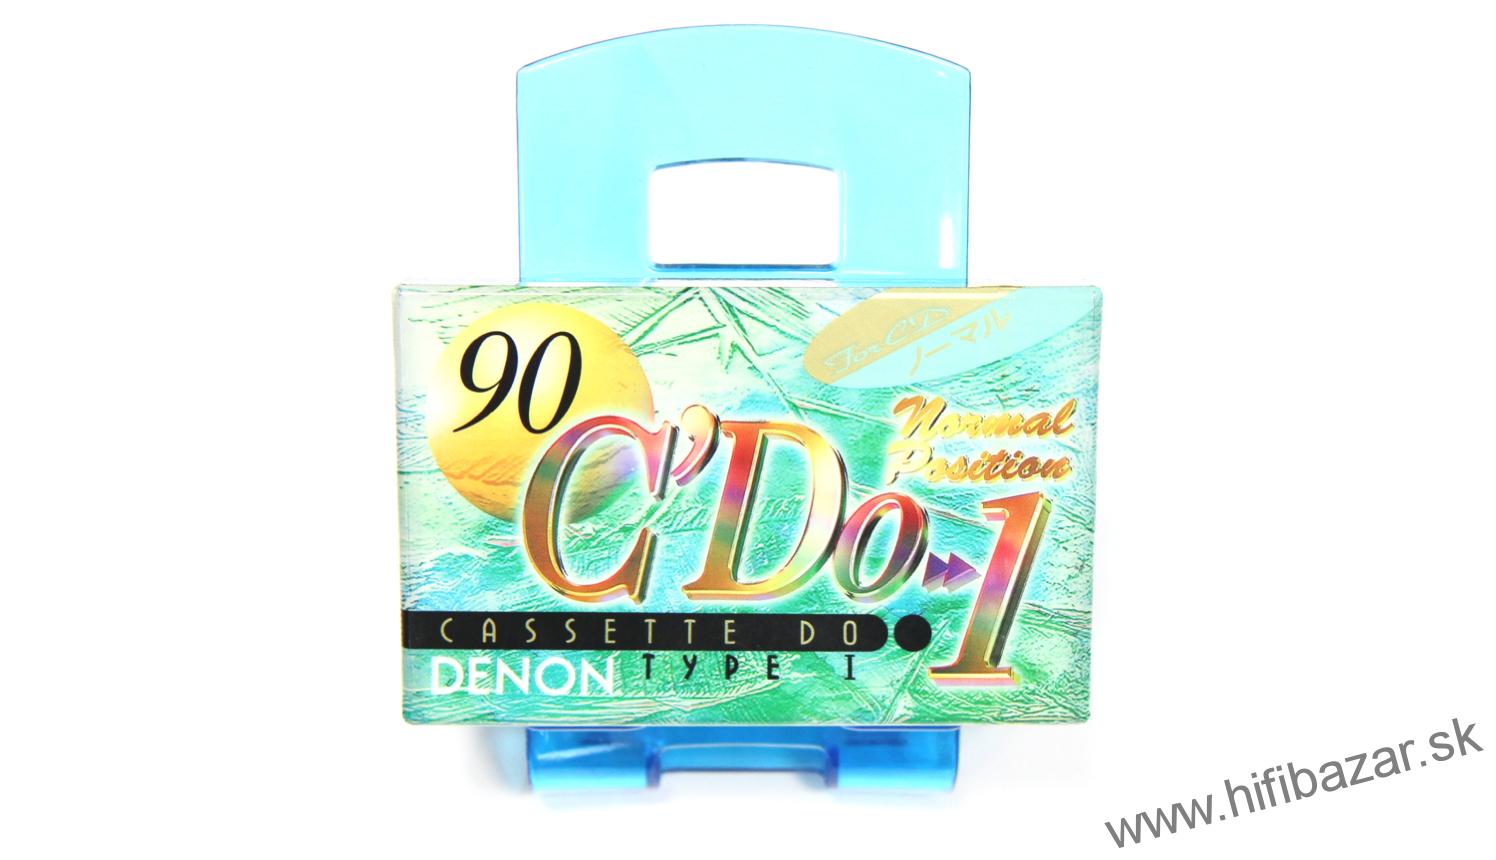 DENON C'DO1-90 Japan